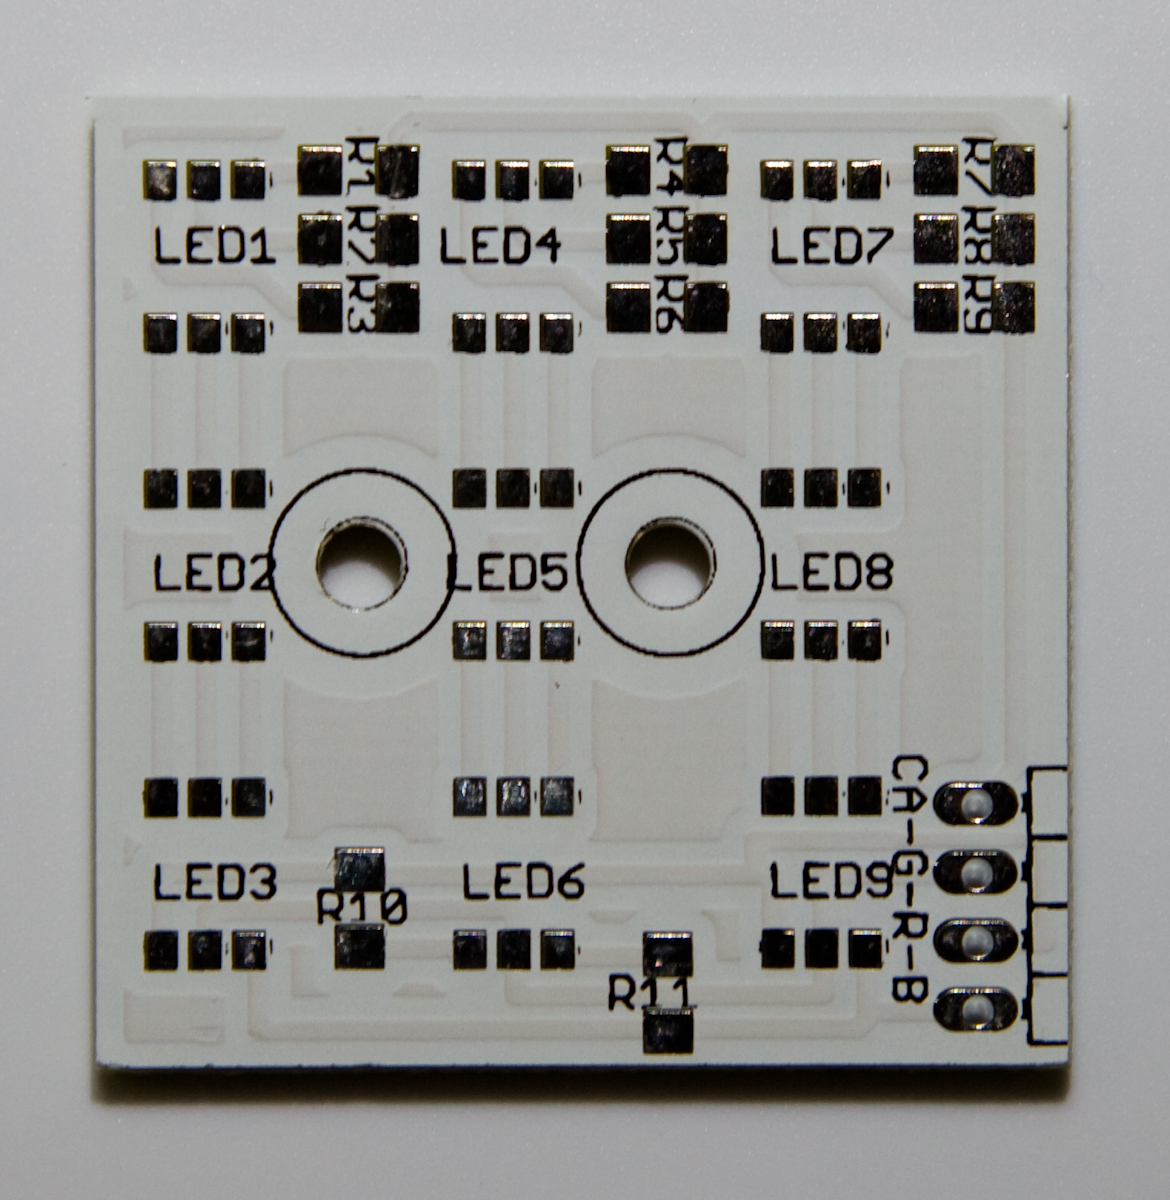 PCB LED cluster 3x3 for PLCC6